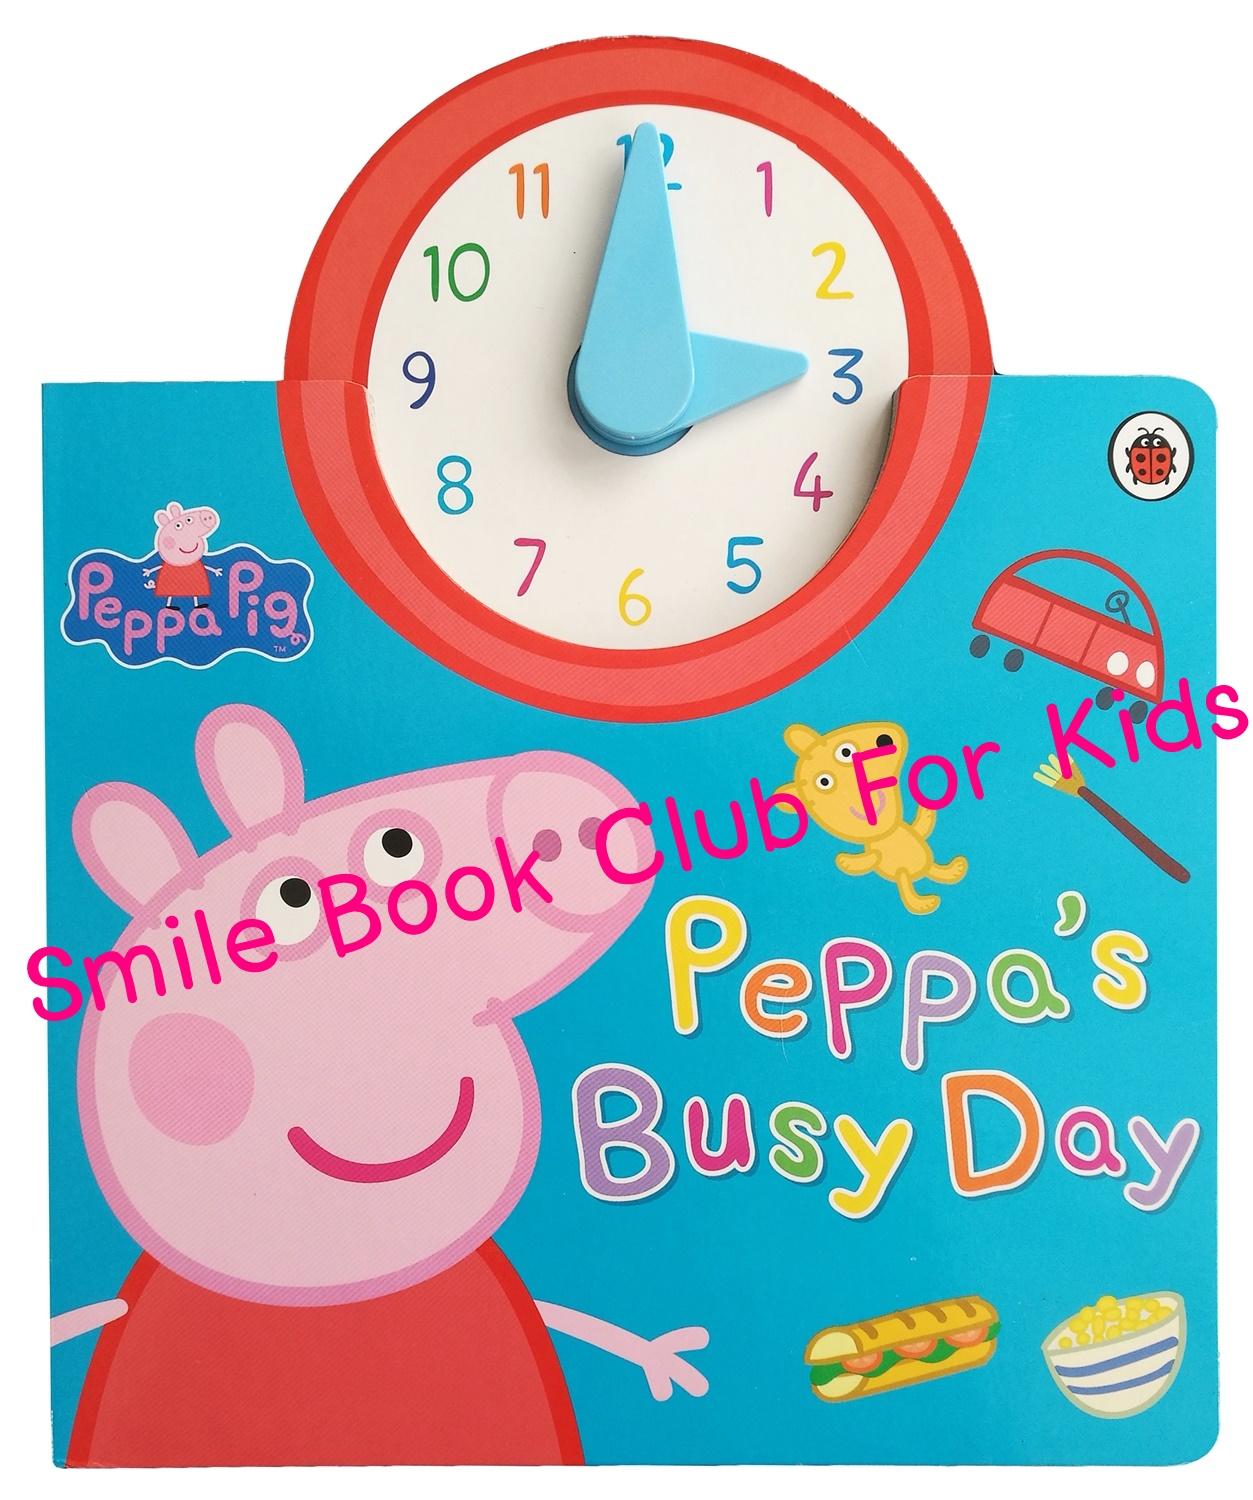 Peppa Pig - Peppa's Busy Day (หนังสือนิทานภาษาอังกฤษ) - บอร์ดบุ๊ค